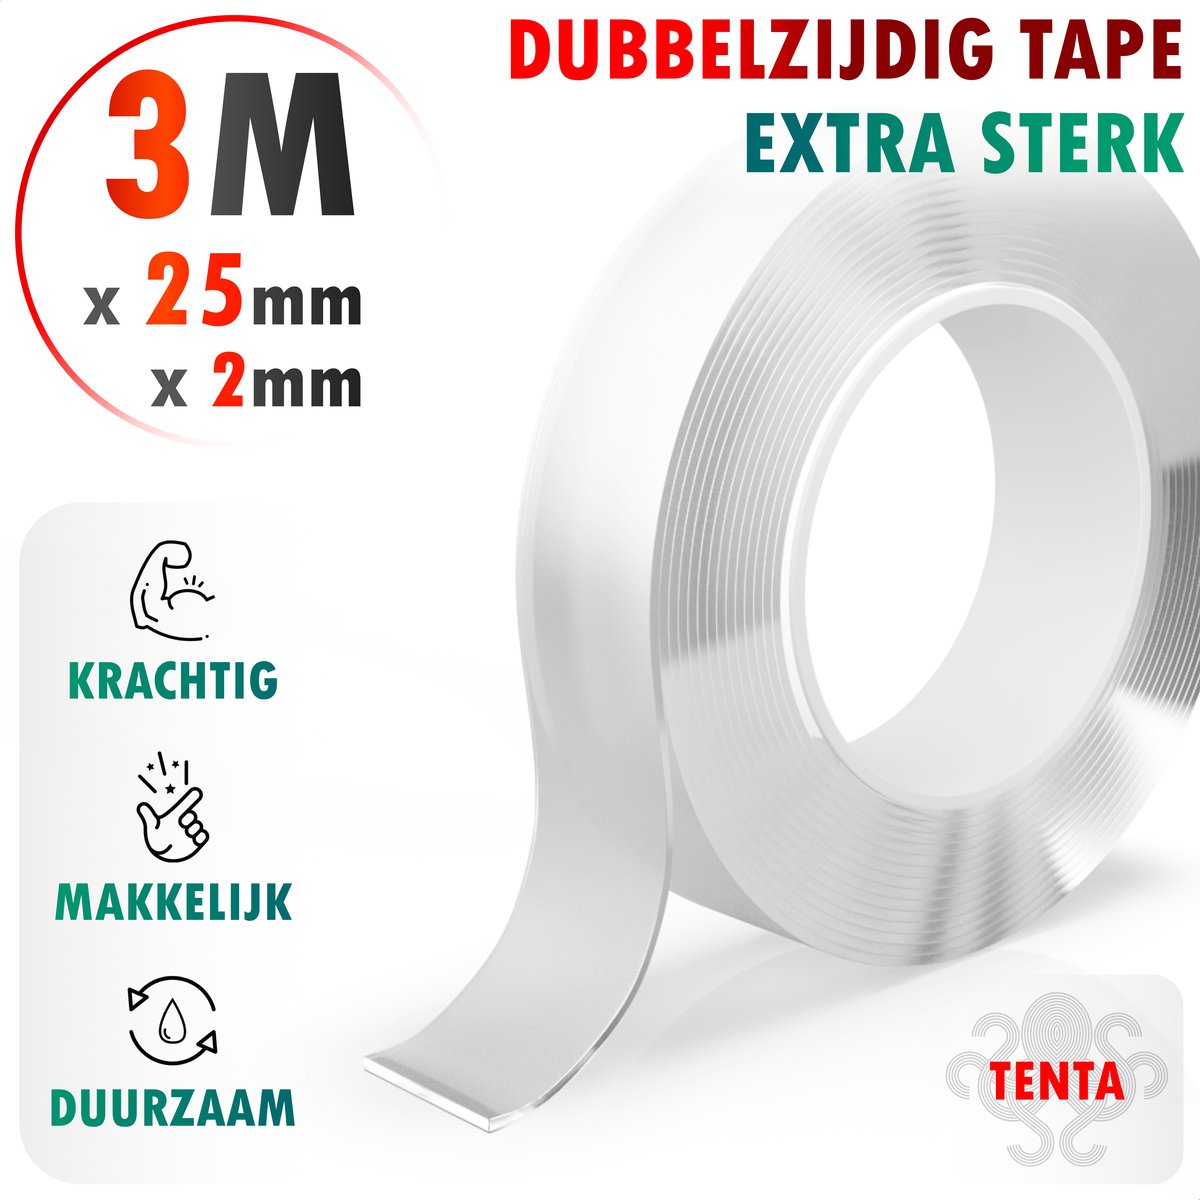 Dubbelzijdig Tape Extra Sterk - 3m 25mm x 2mm | bol.com